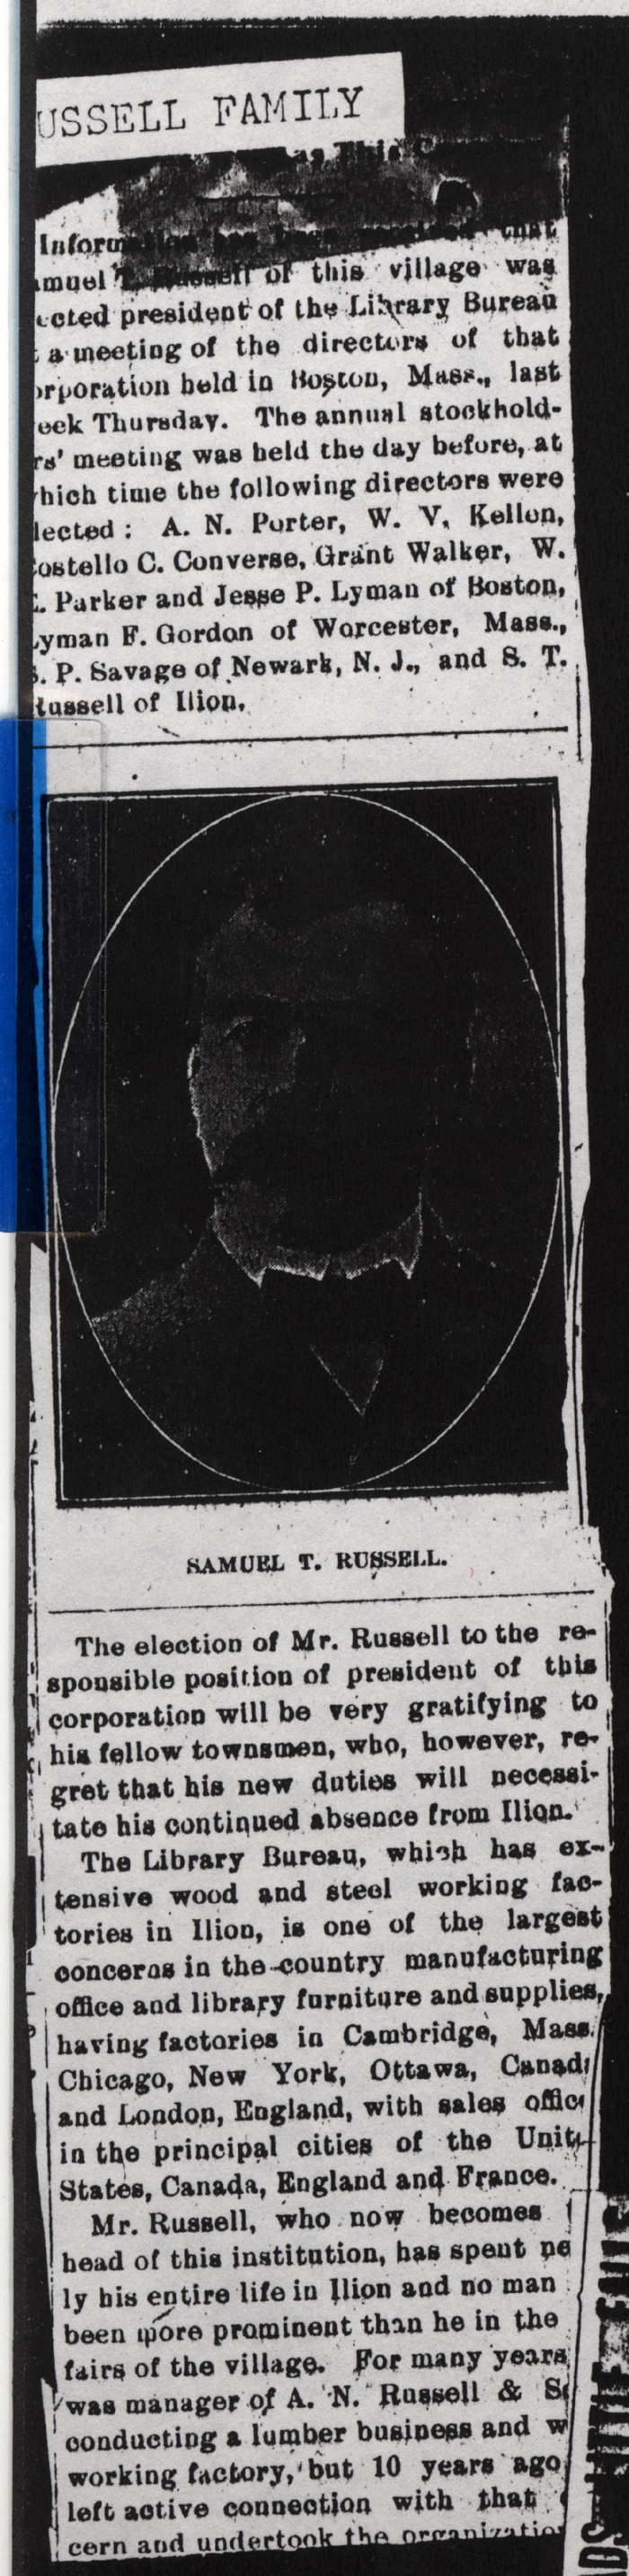 russell samuel t library bureau president 1903